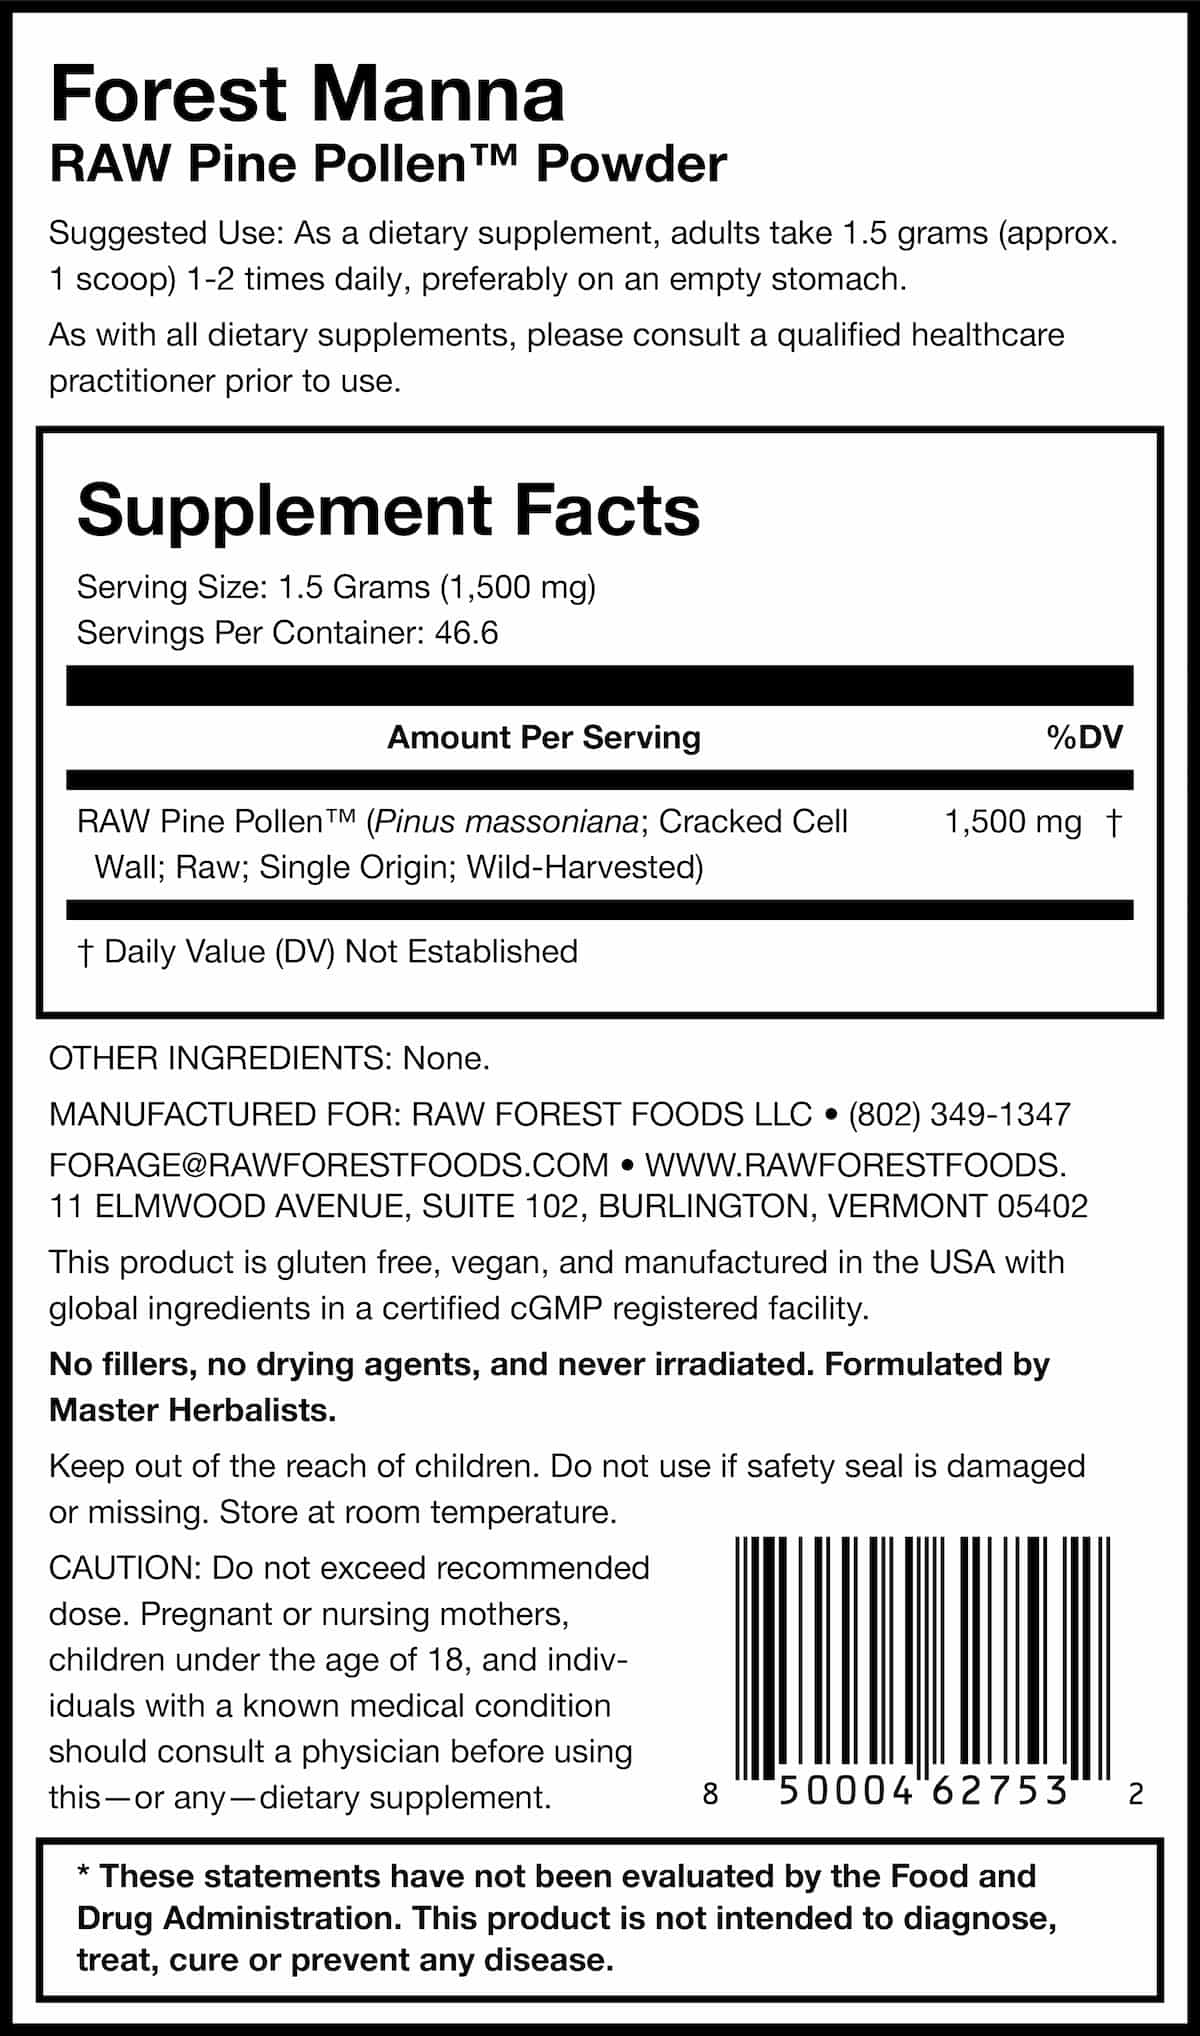 Forest Manna RAW Pine Pollen Powder 70 Grams Supplement Facts Panel